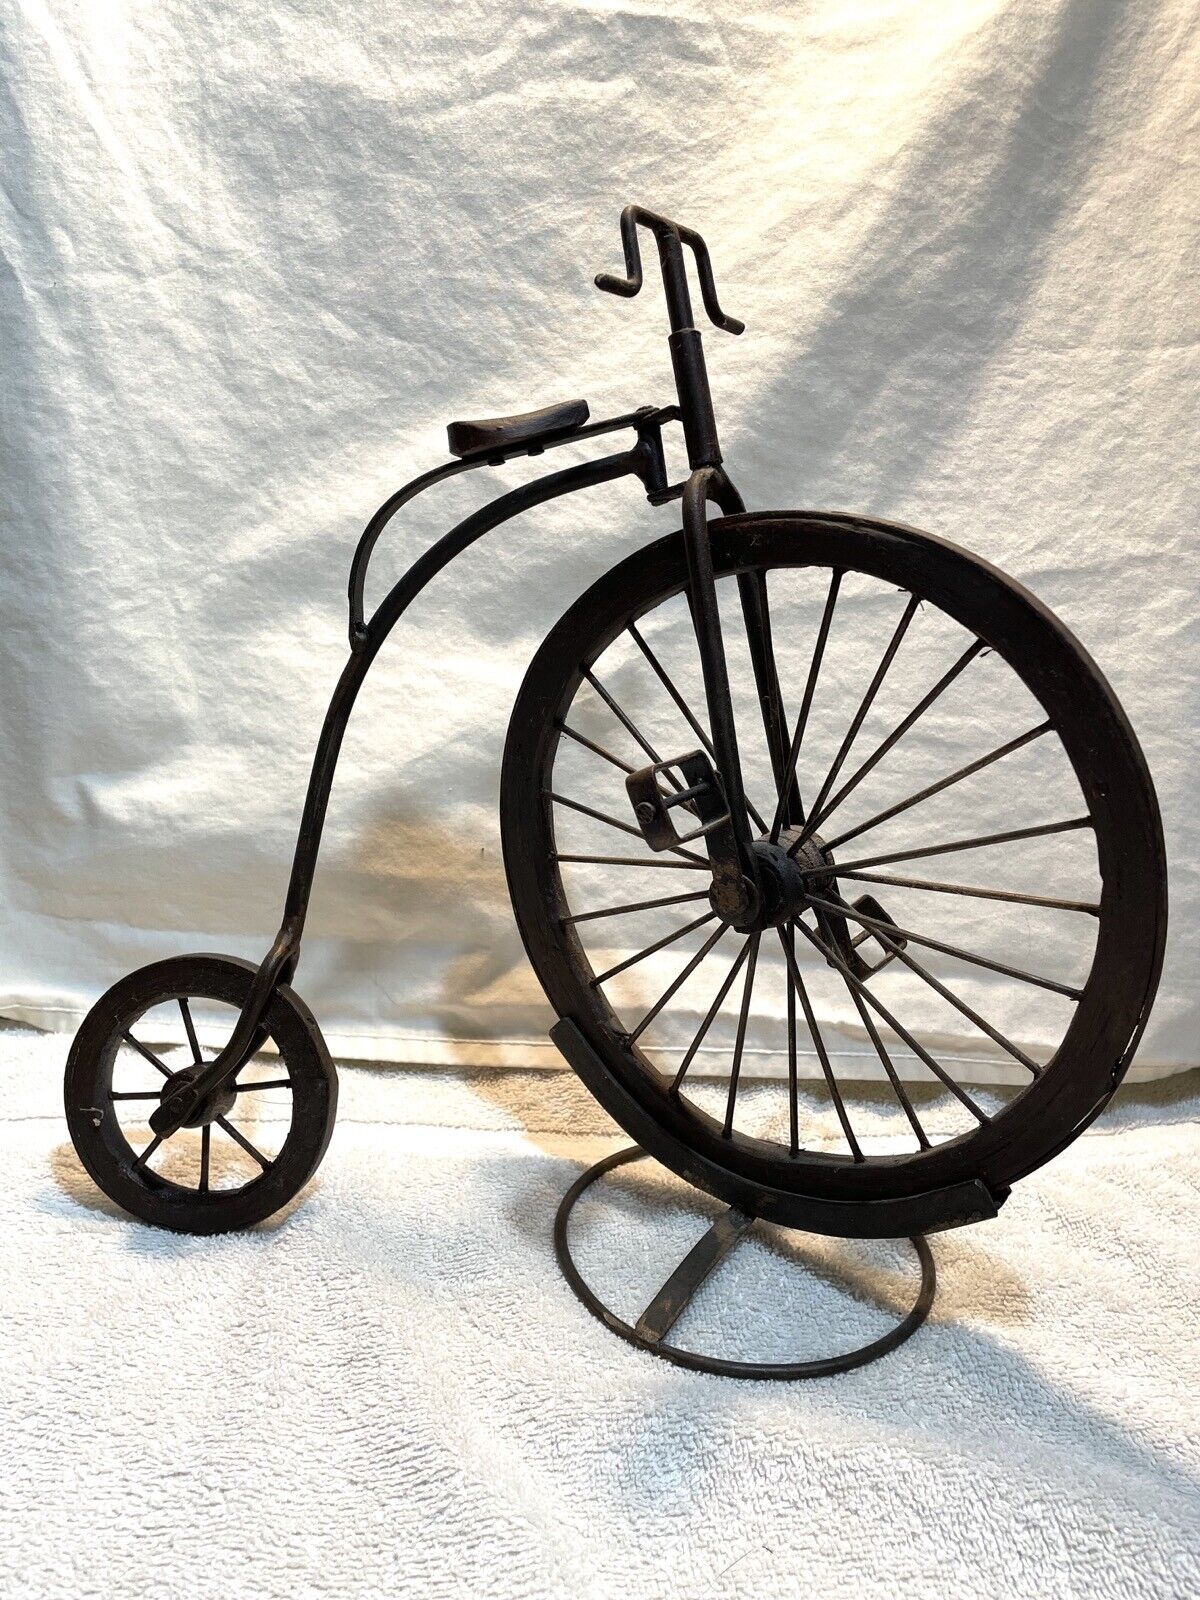 Display Reproduction of a Vintage 1800’s era Big Wheel Bicycle - All Metal